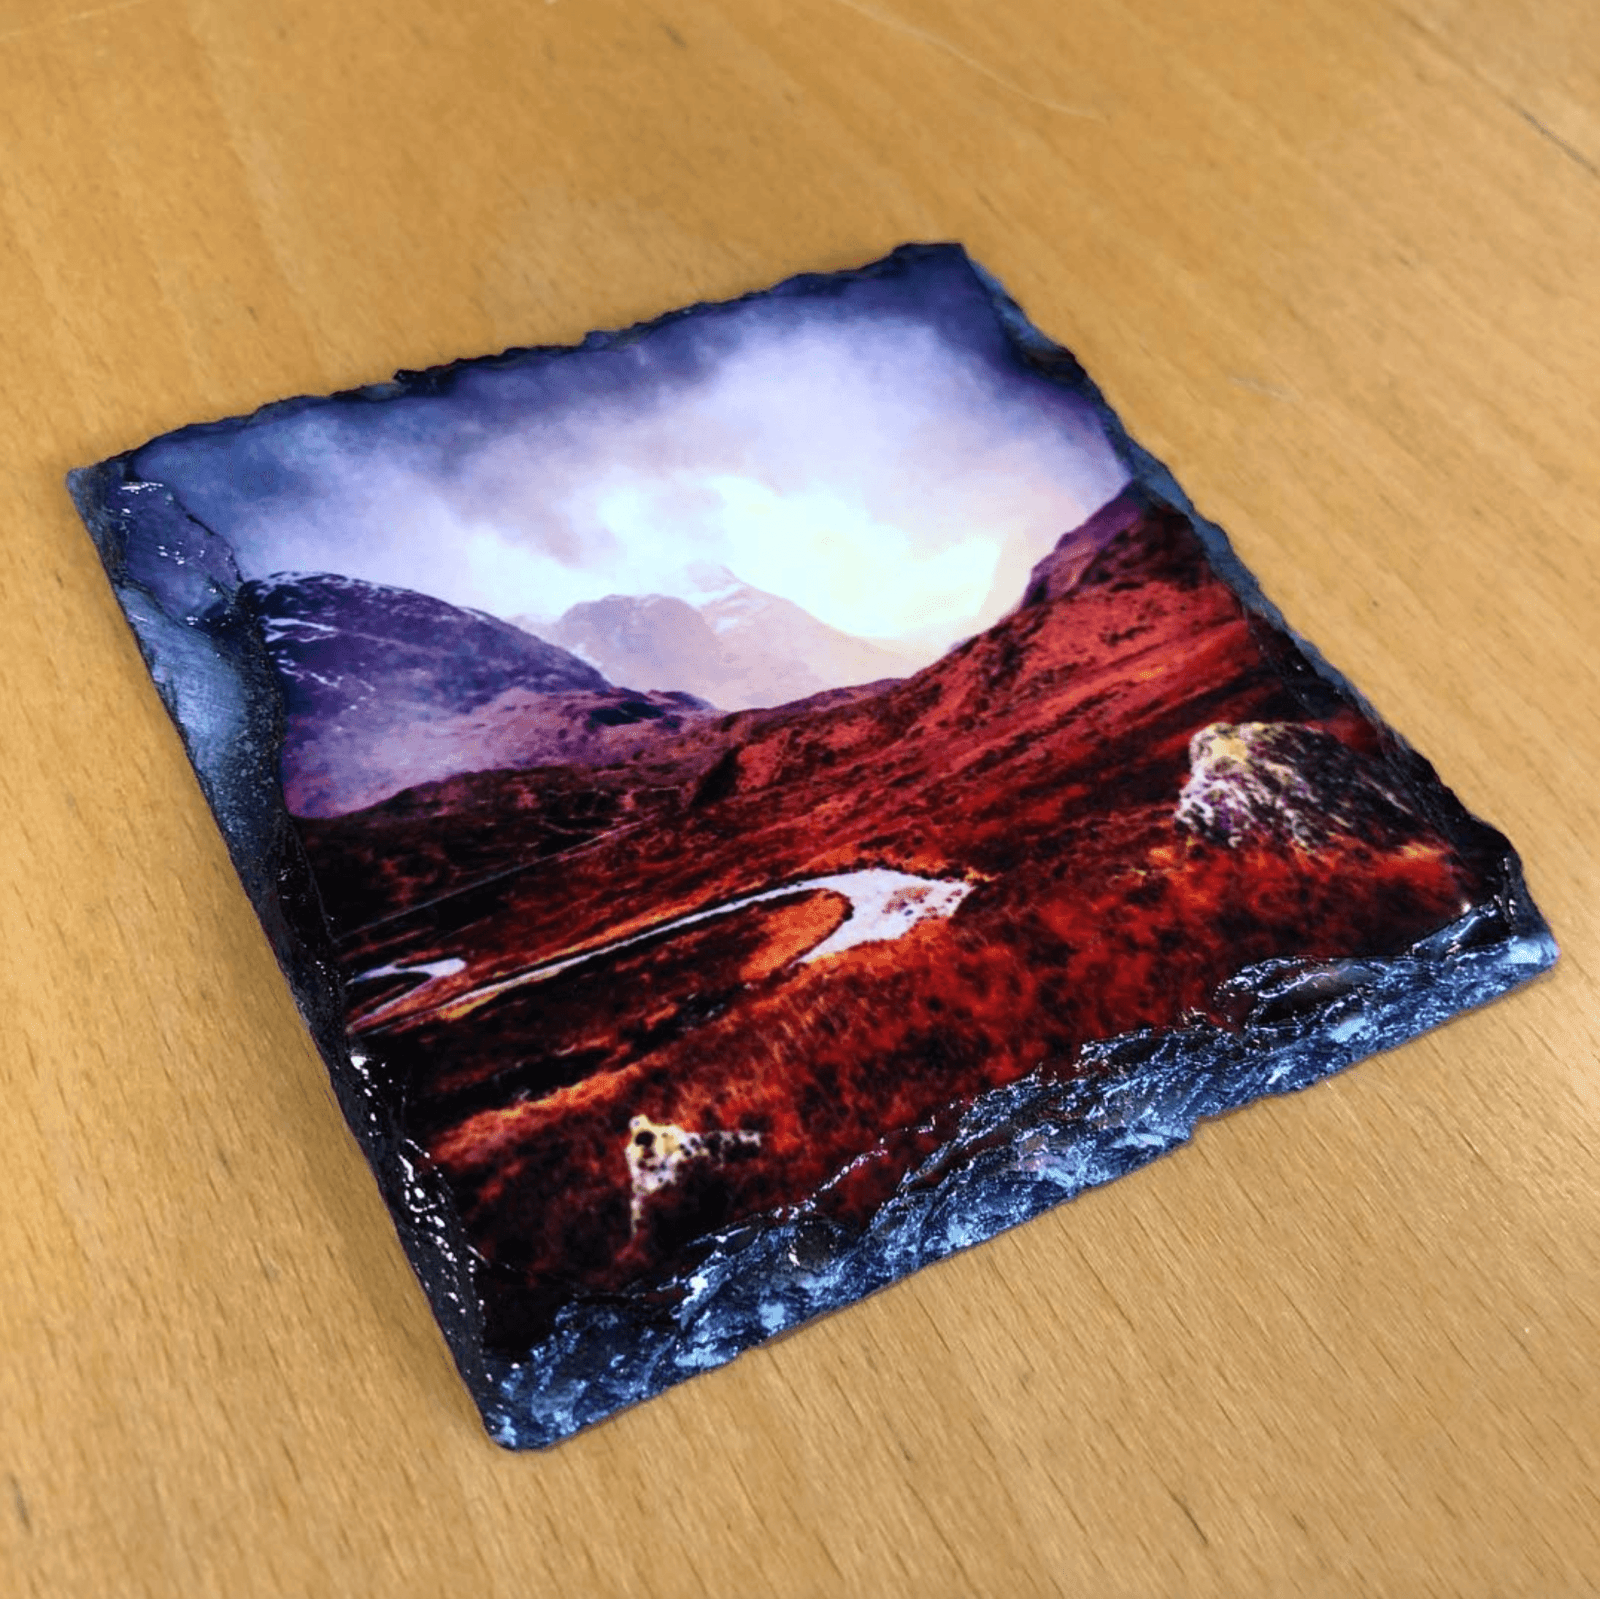 The Brooding Cuillin Scottish Slate Art-Slate Art-Skye Art Gallery-Paintings, Prints, Homeware, Art Gifts From Scotland By Scottish Artist Kevin Hunter